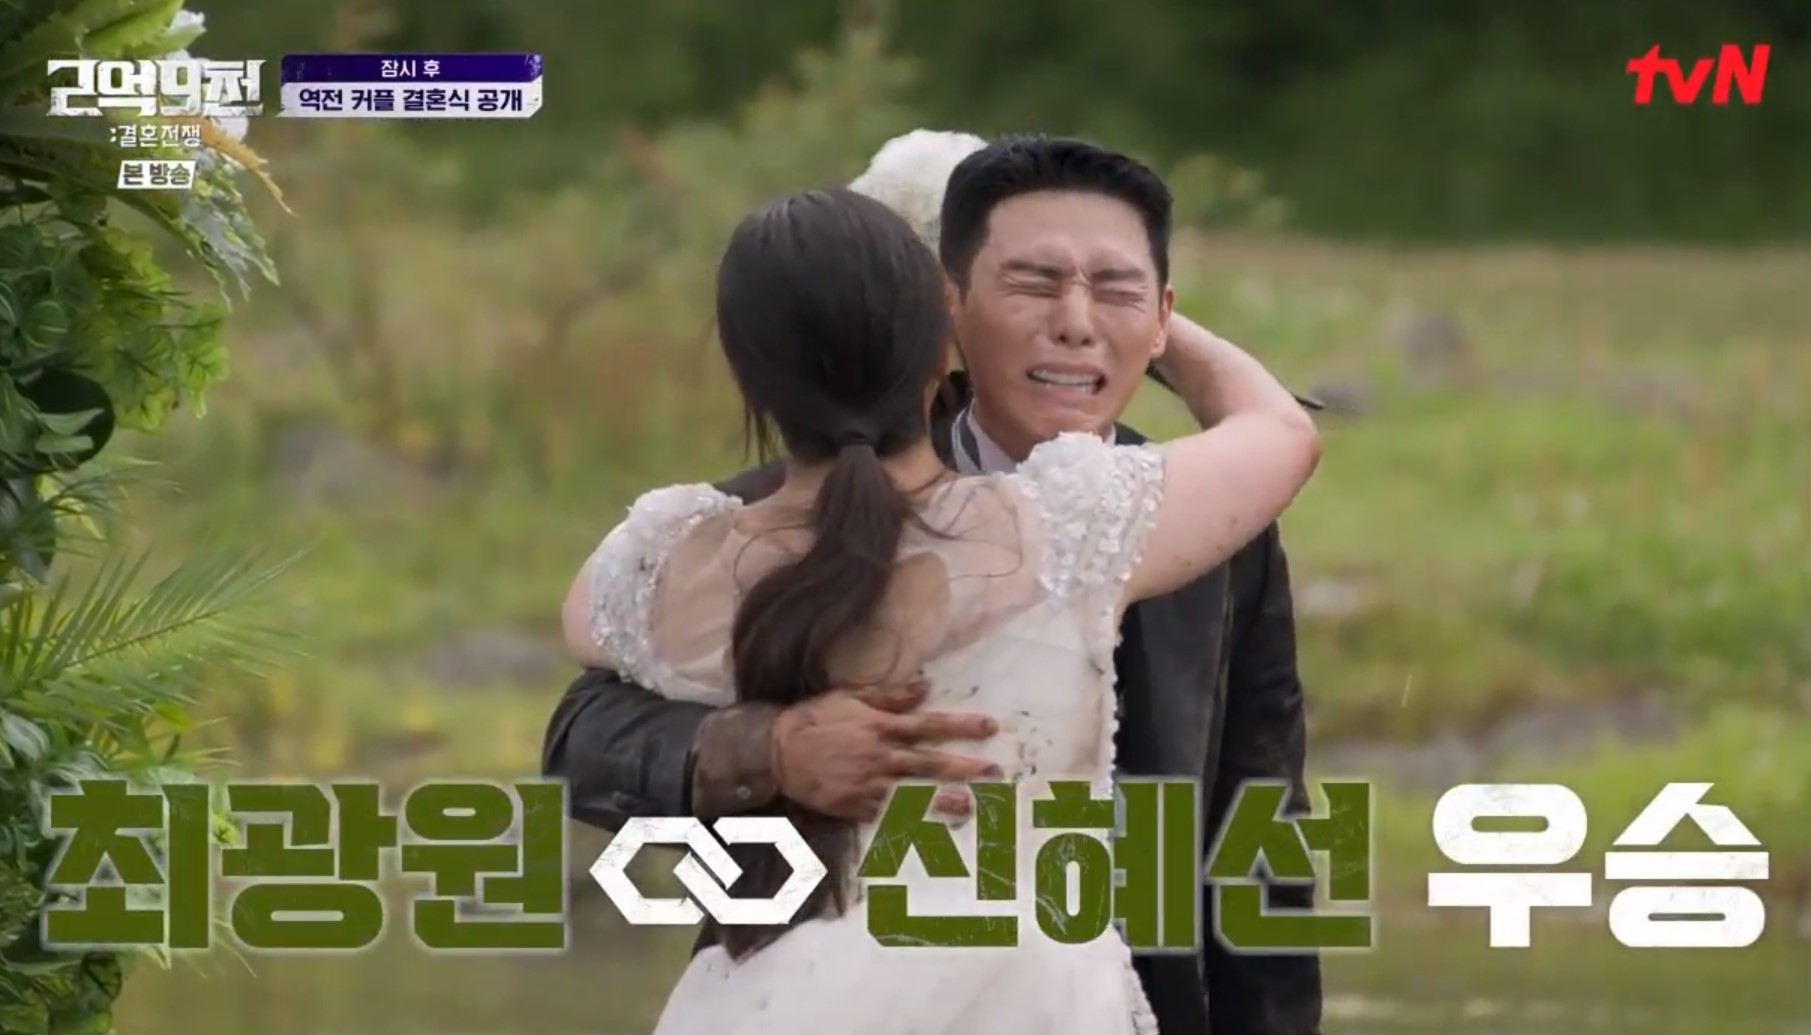 290 Million KRW : Marriage War&#44; Final review&#44; icon of twist Choi Kwang-won&hearts;Shin Hye-sun couple&#39;s touching victory